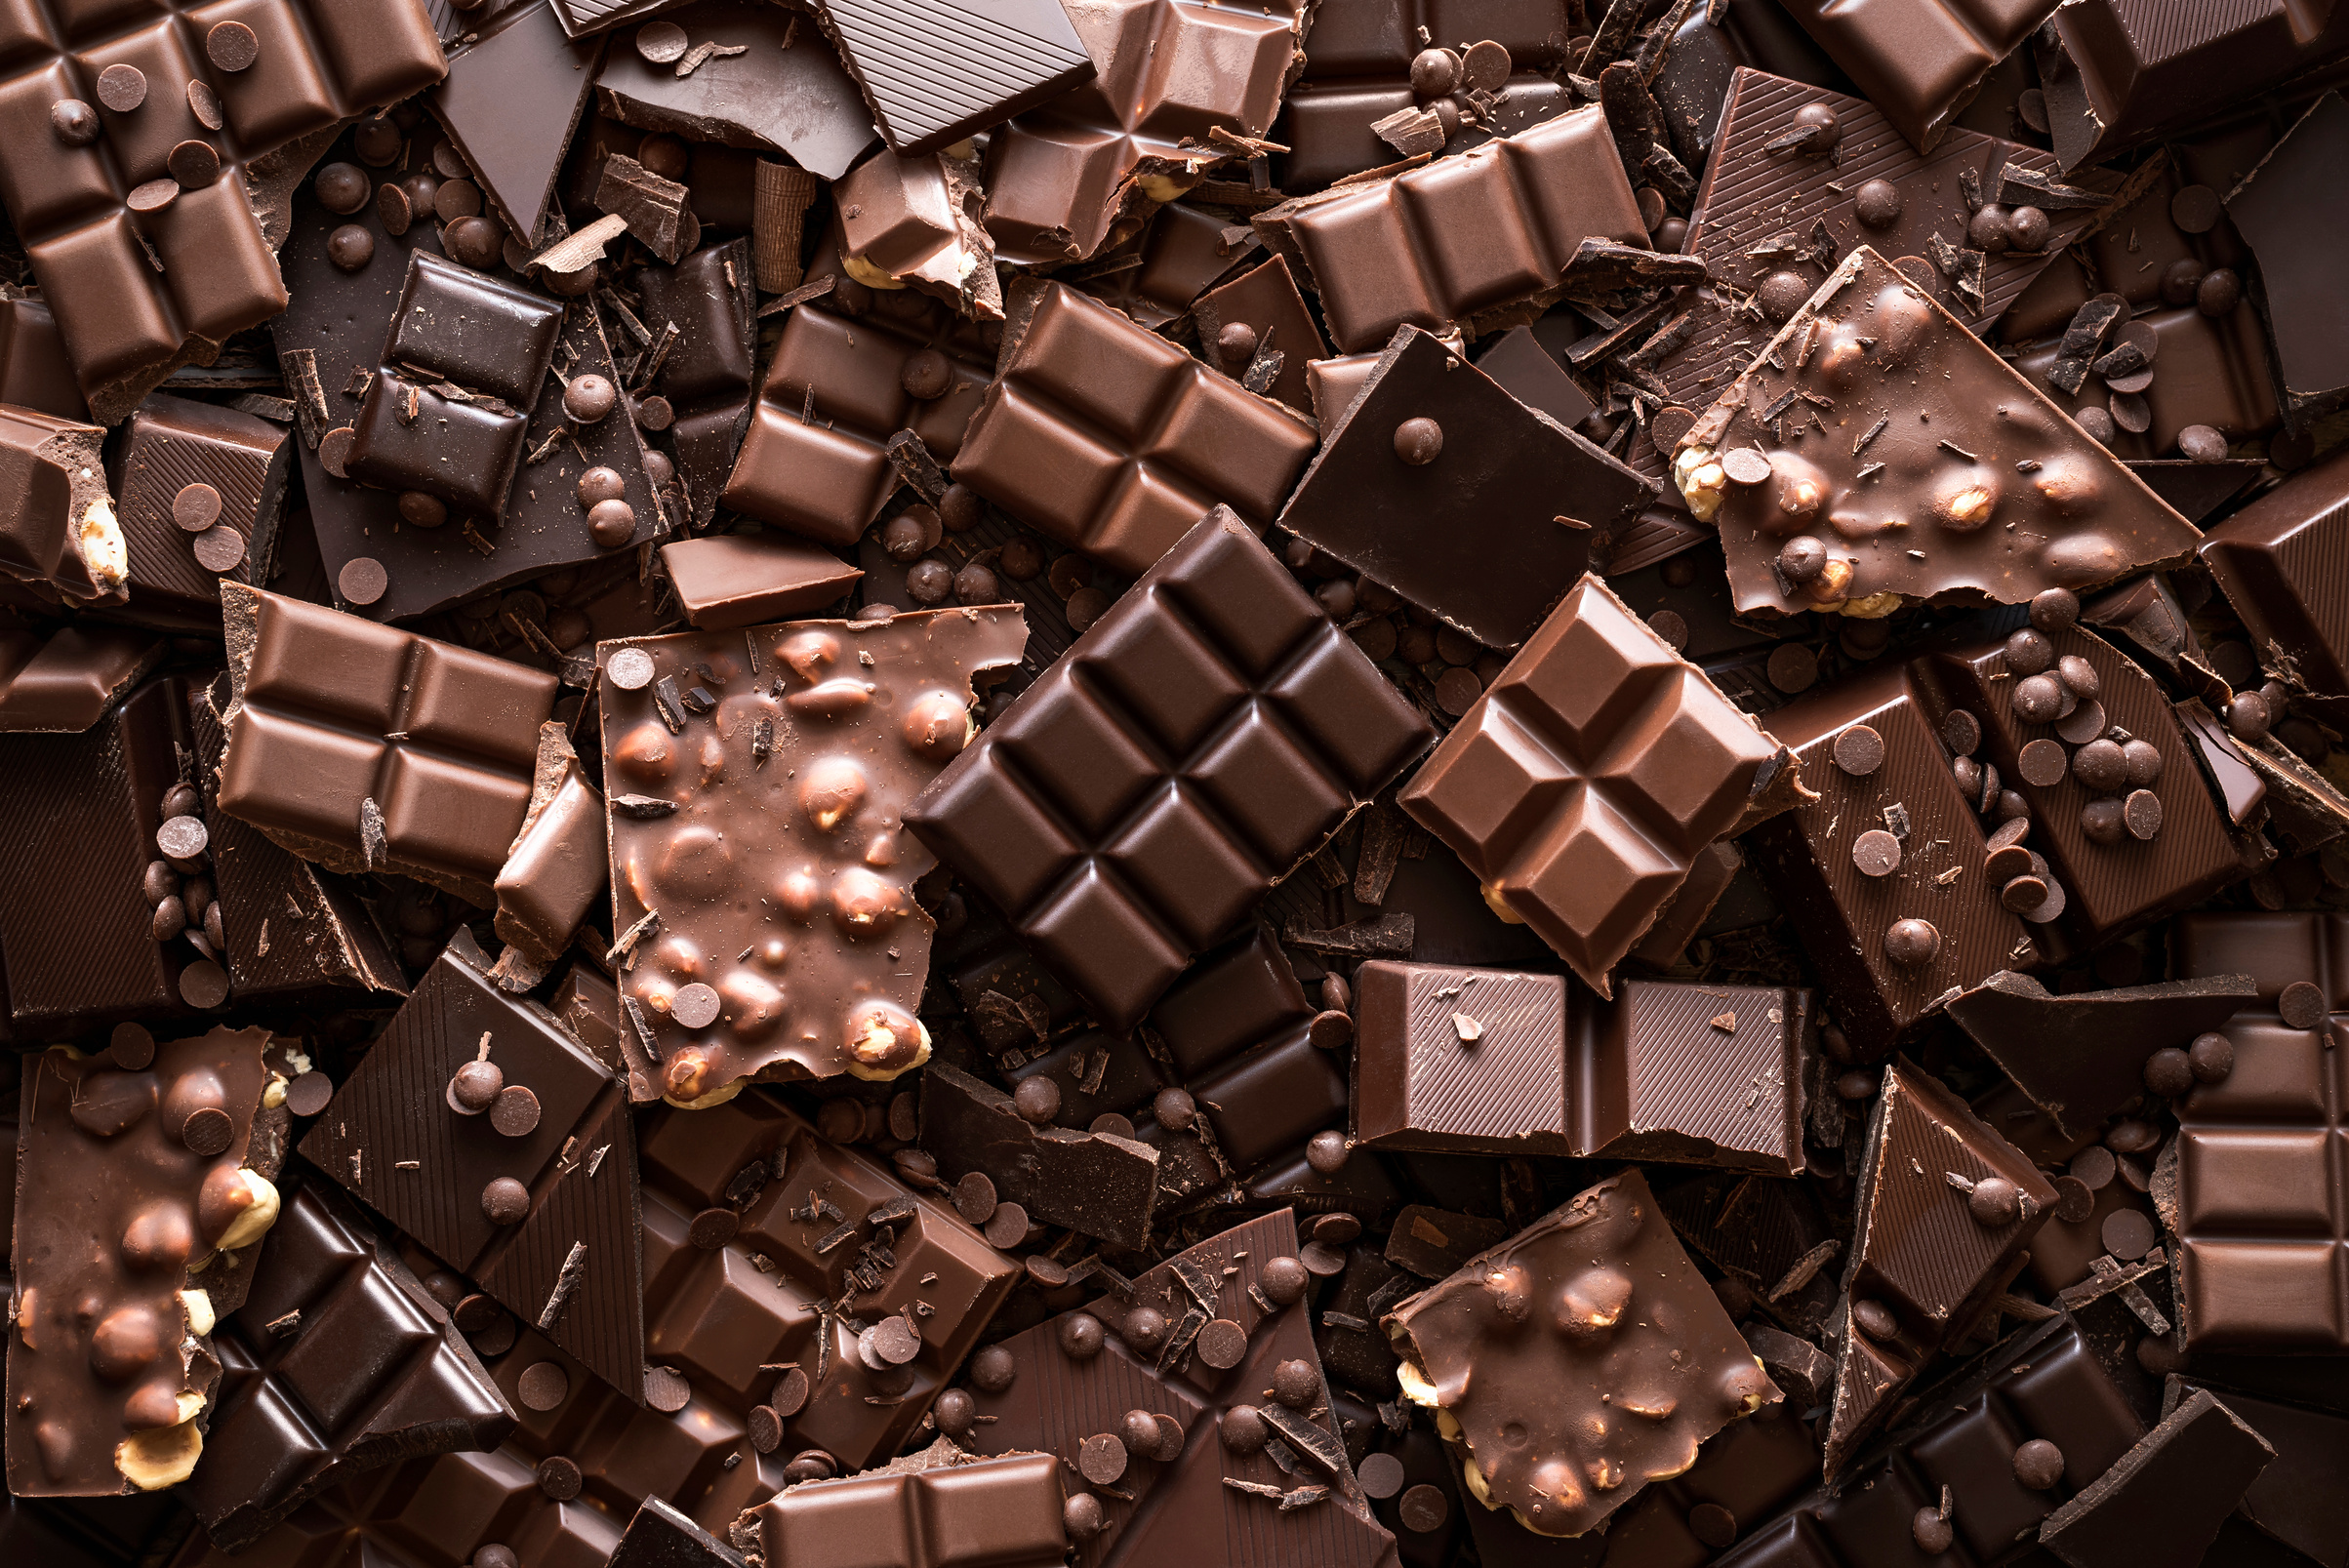 Assortment of Chocolate Bars